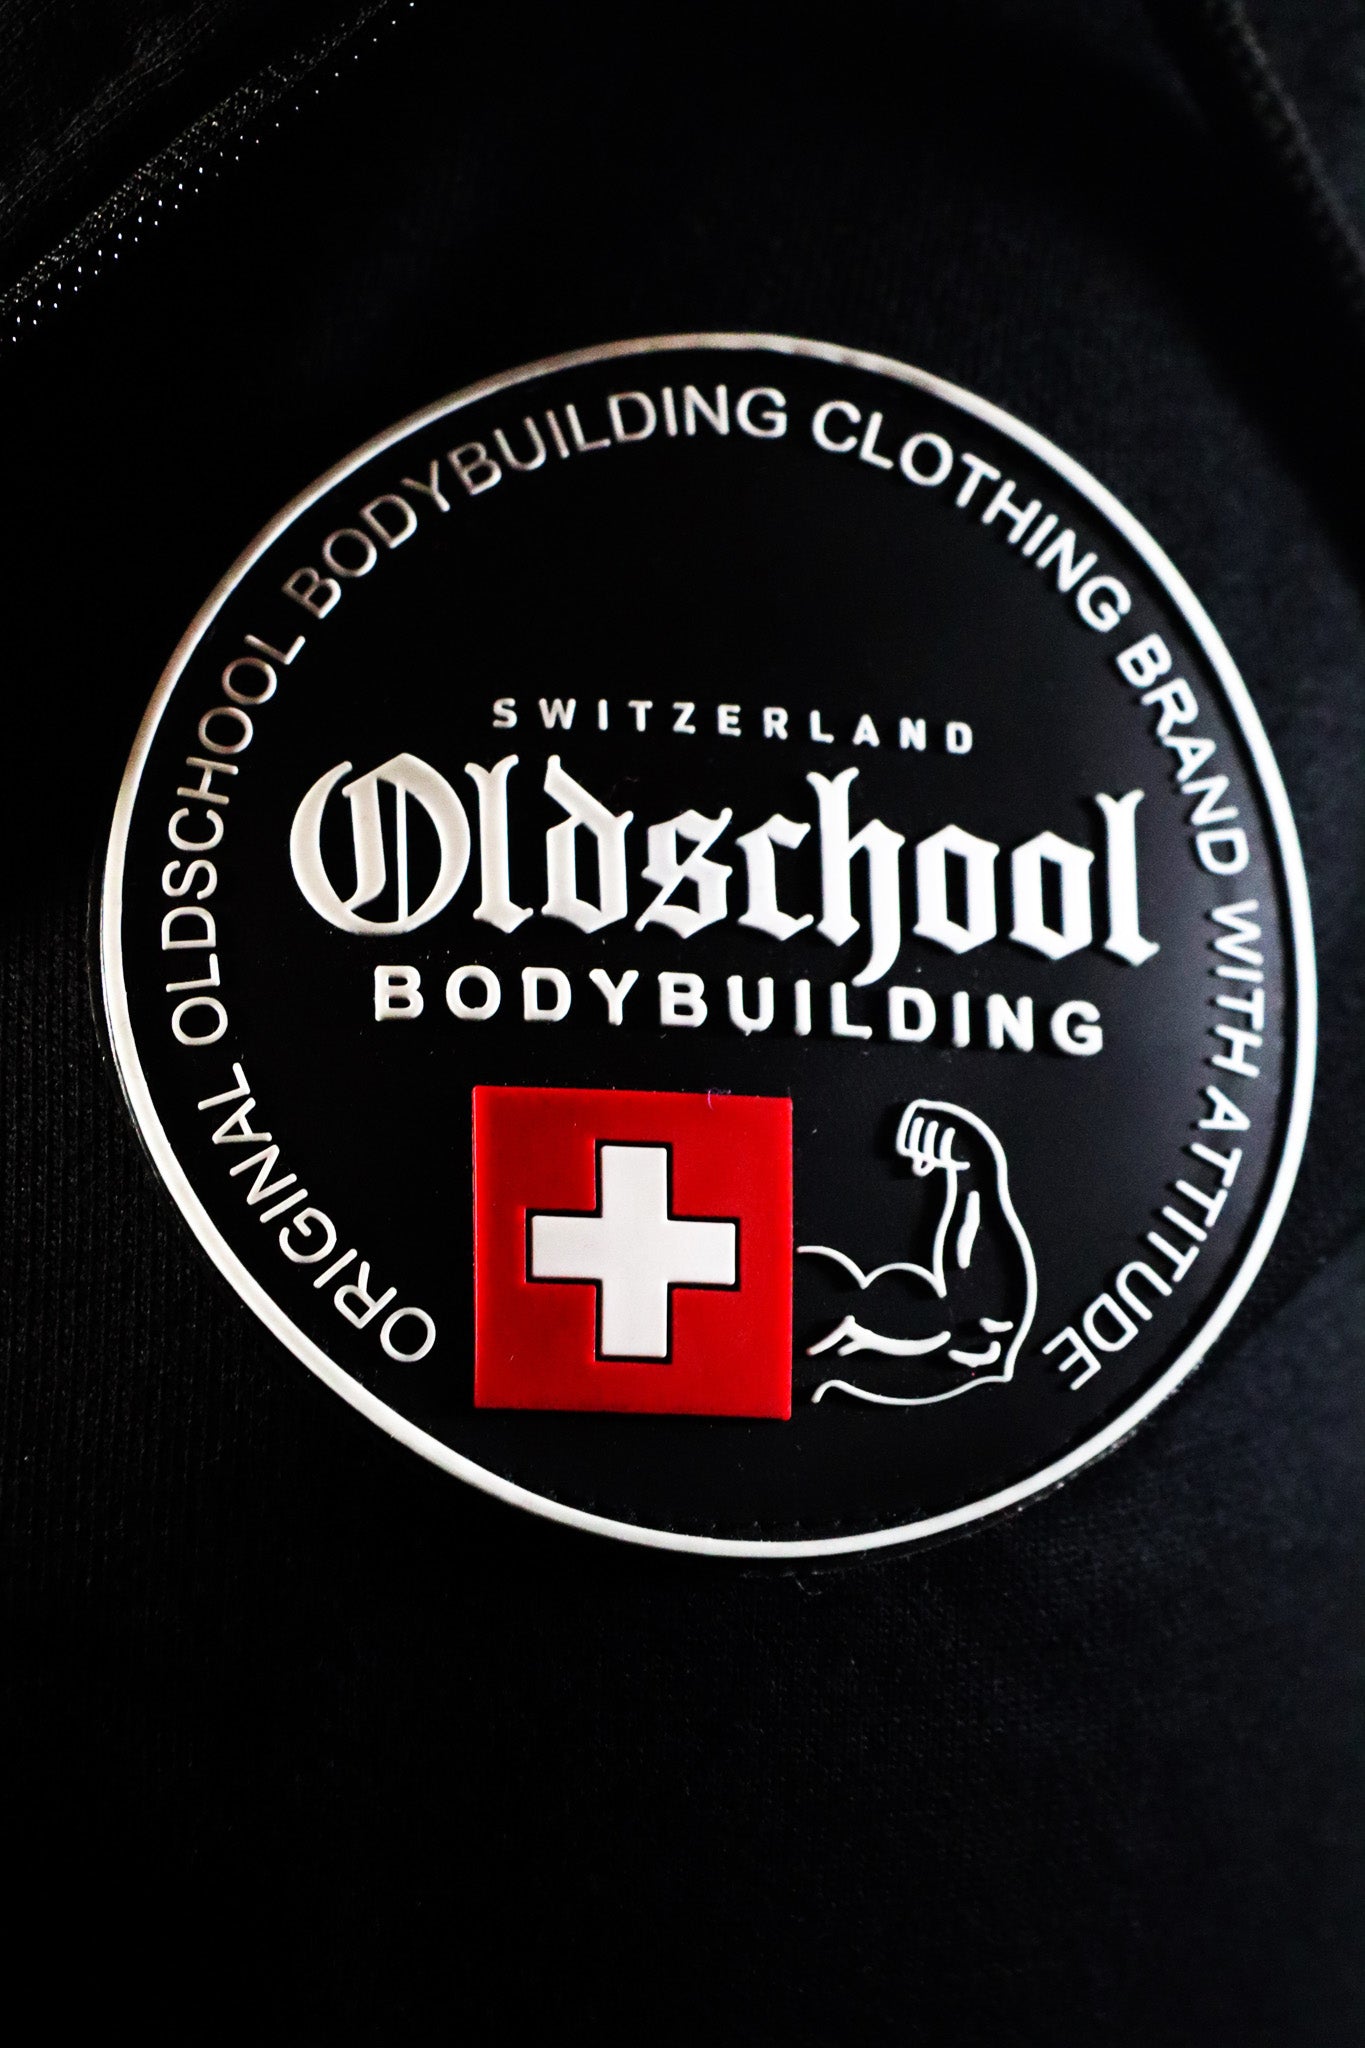 Oldschool Bodybuilding Switzerland Womens Legacy Badges Zipped Hoodie - Schwarz/Blau